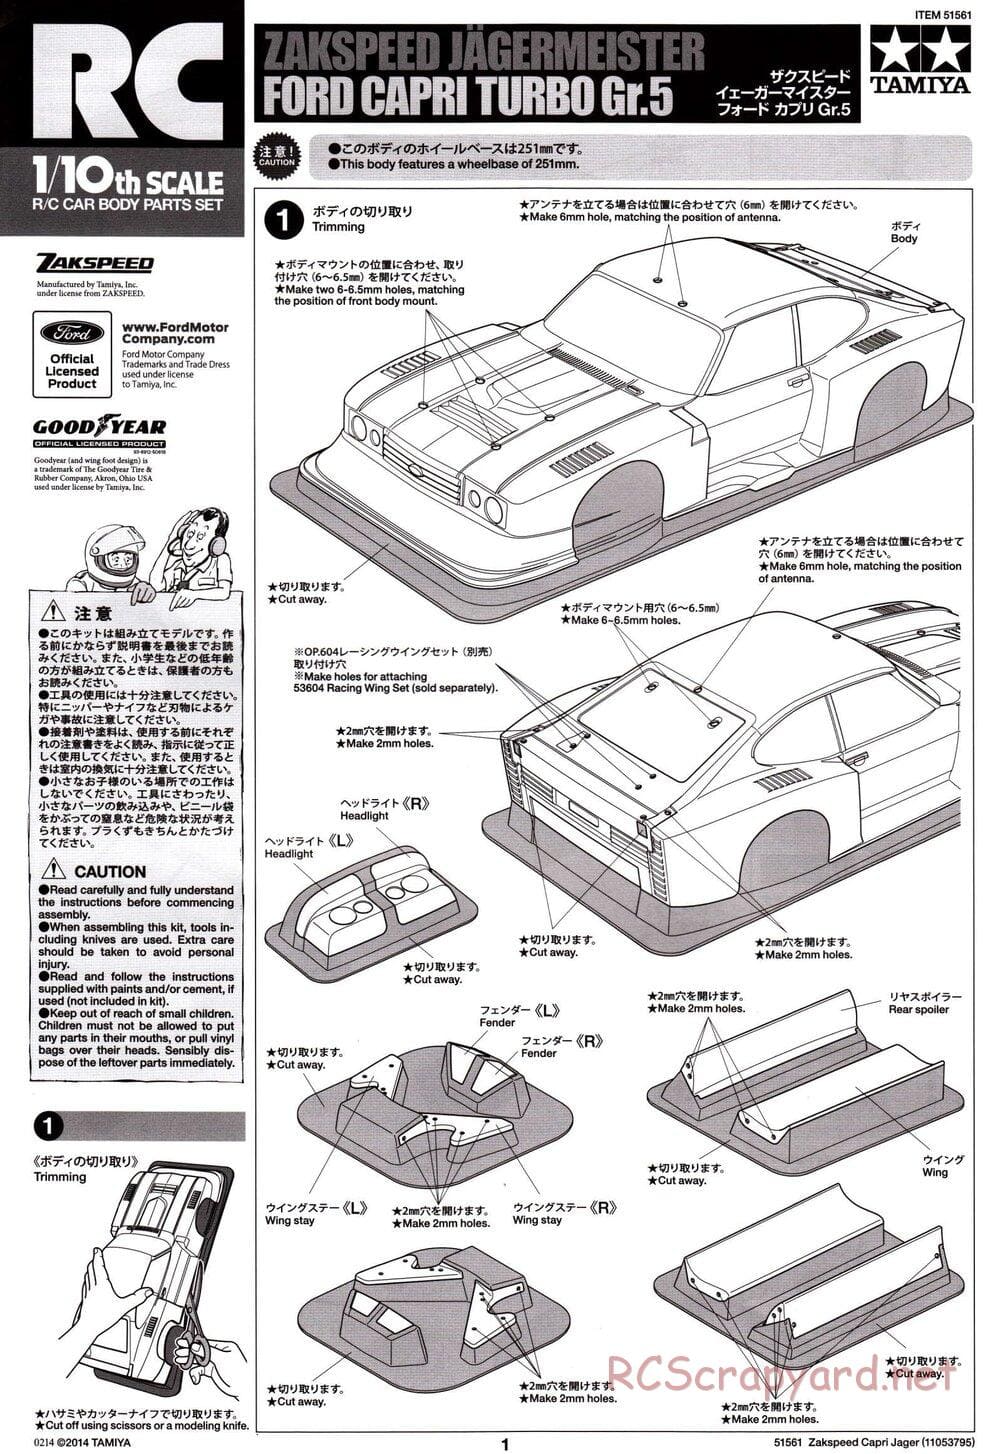 Tamiya - Zakspeed Jgermeister Ford Capri Turbo Gr.5 - TT-02 Chassis - Body Manual - Page 1